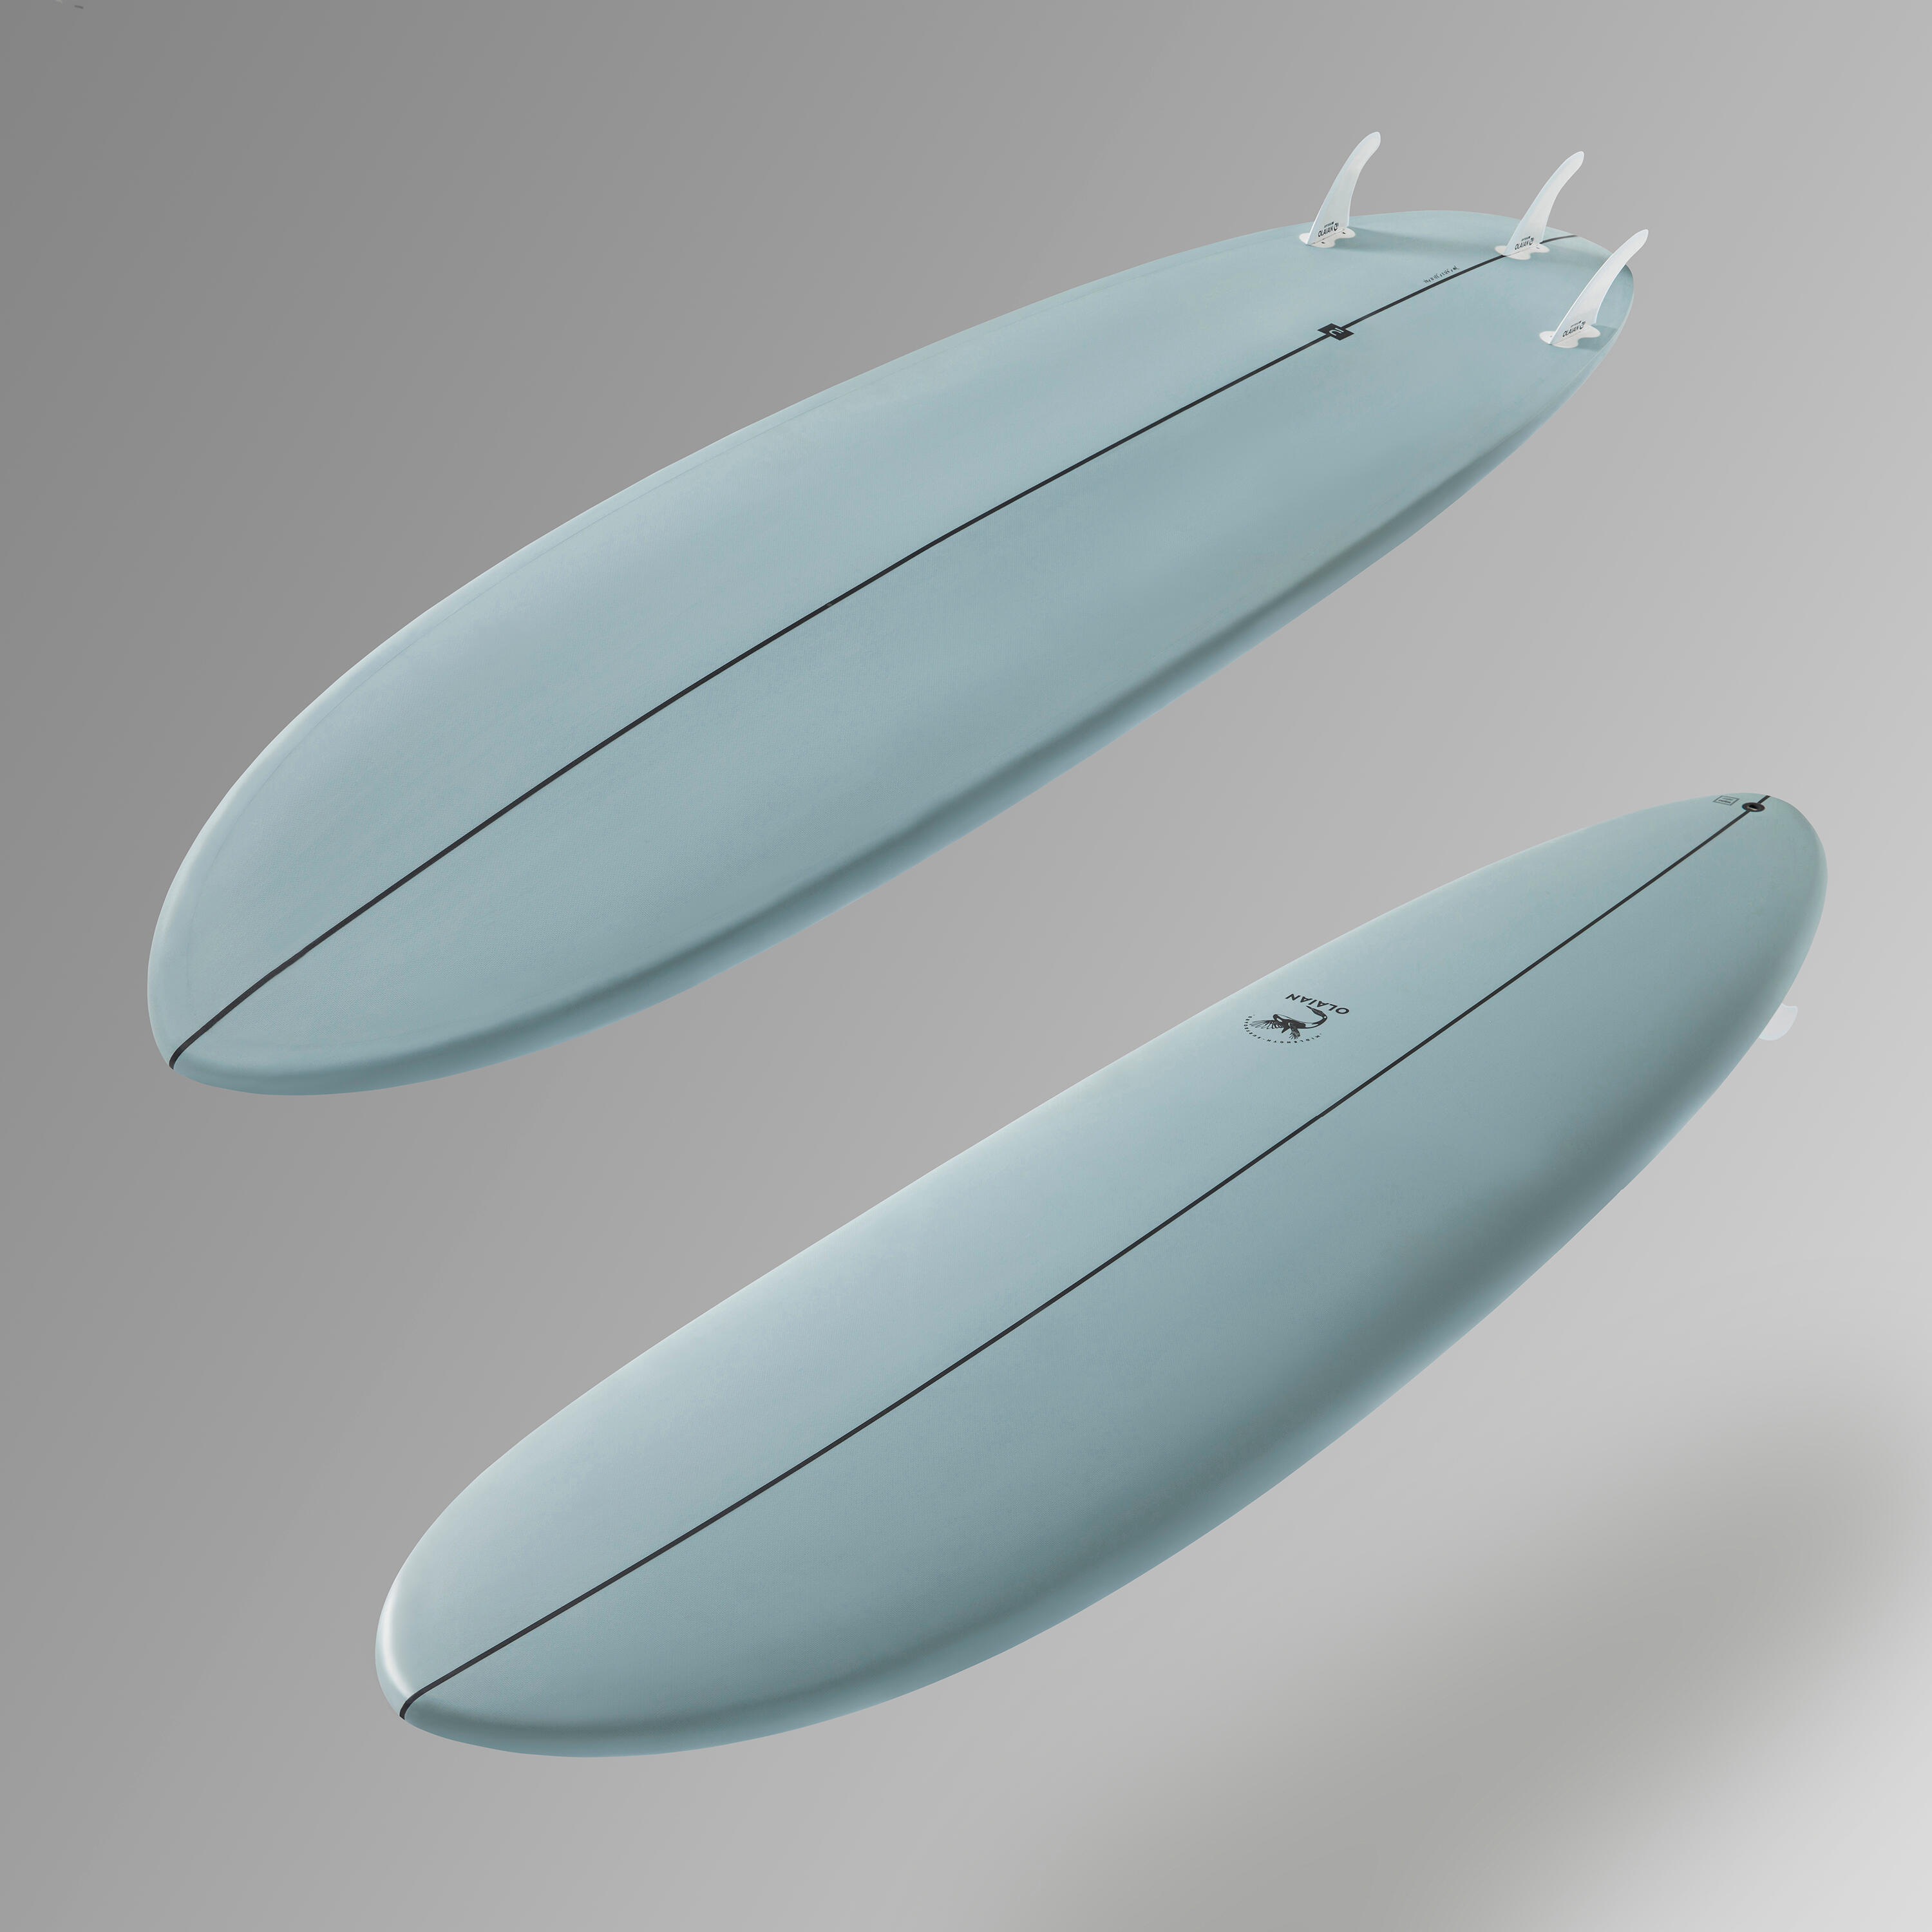 SURFBOARD 500 Hybrid 7' with three fins. 2/14